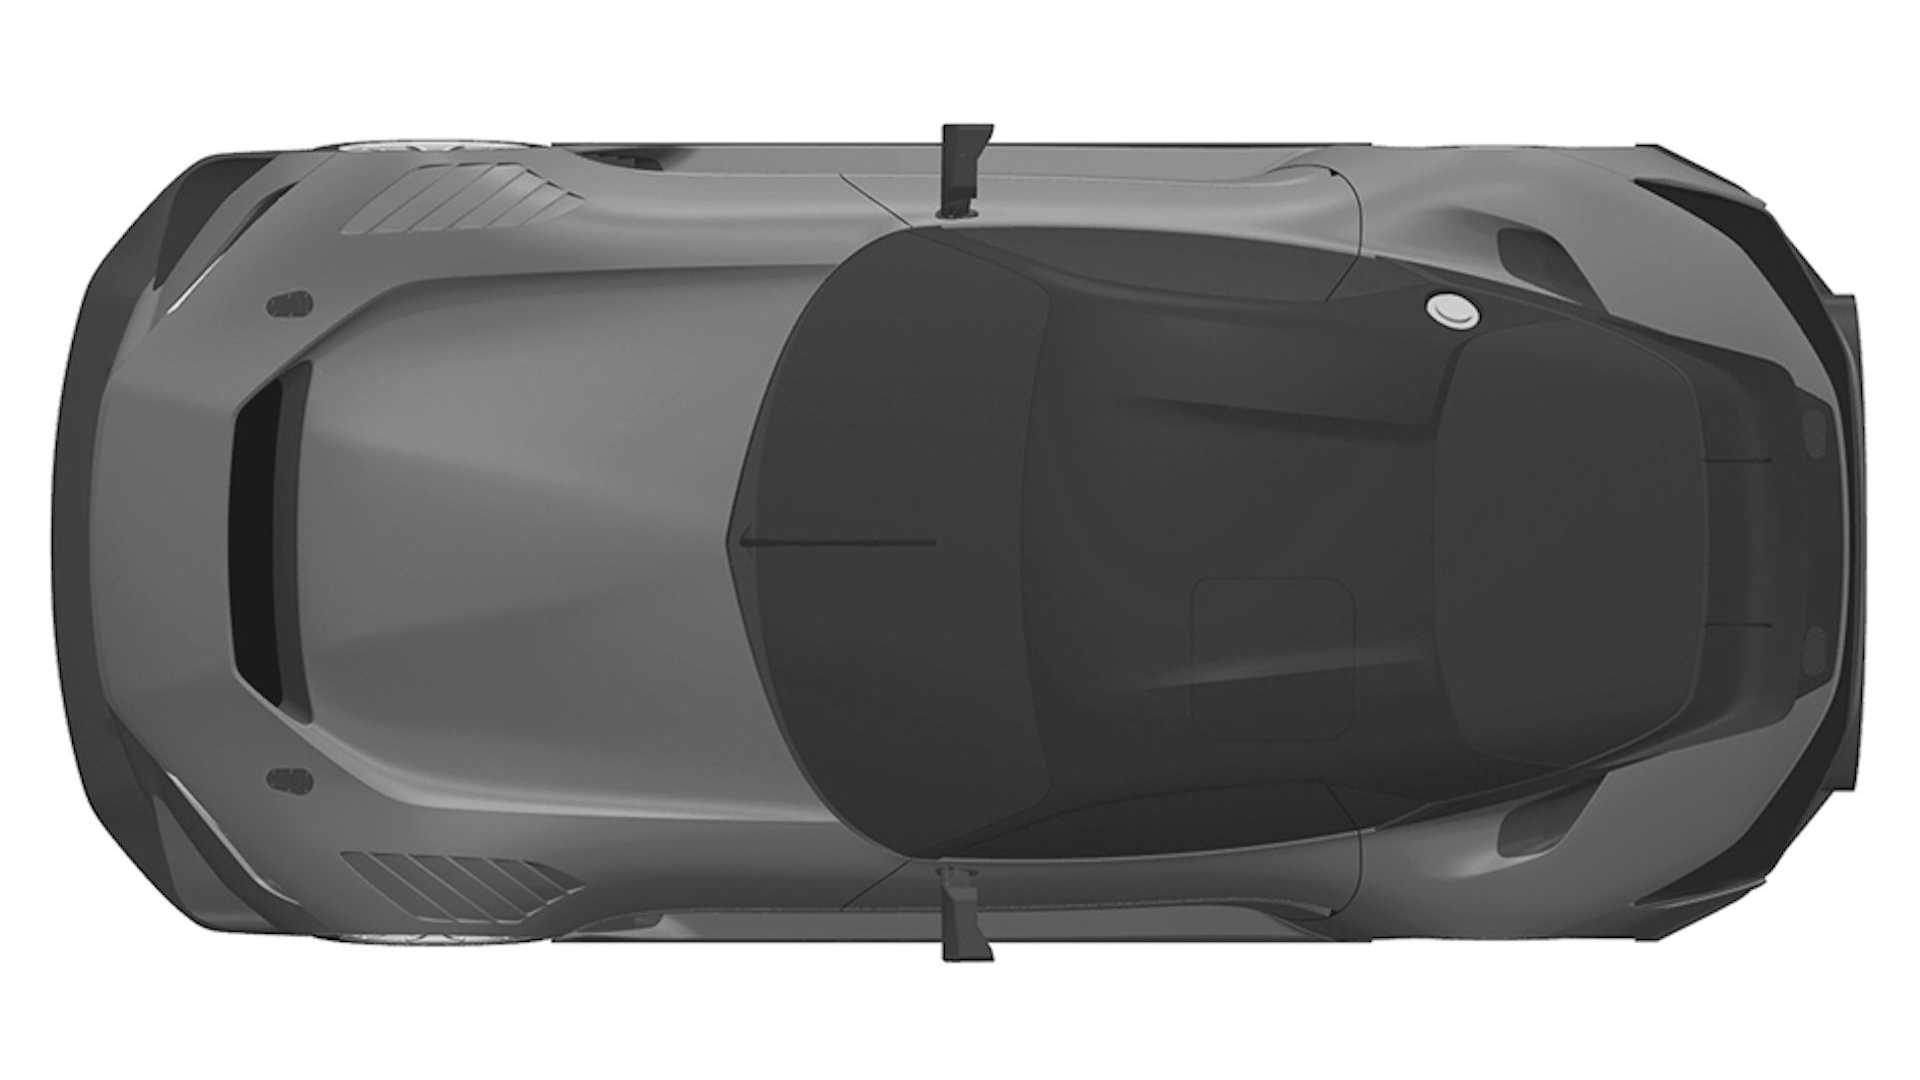 Imágenes patentes del Toyota GR GT3 Vista Superior